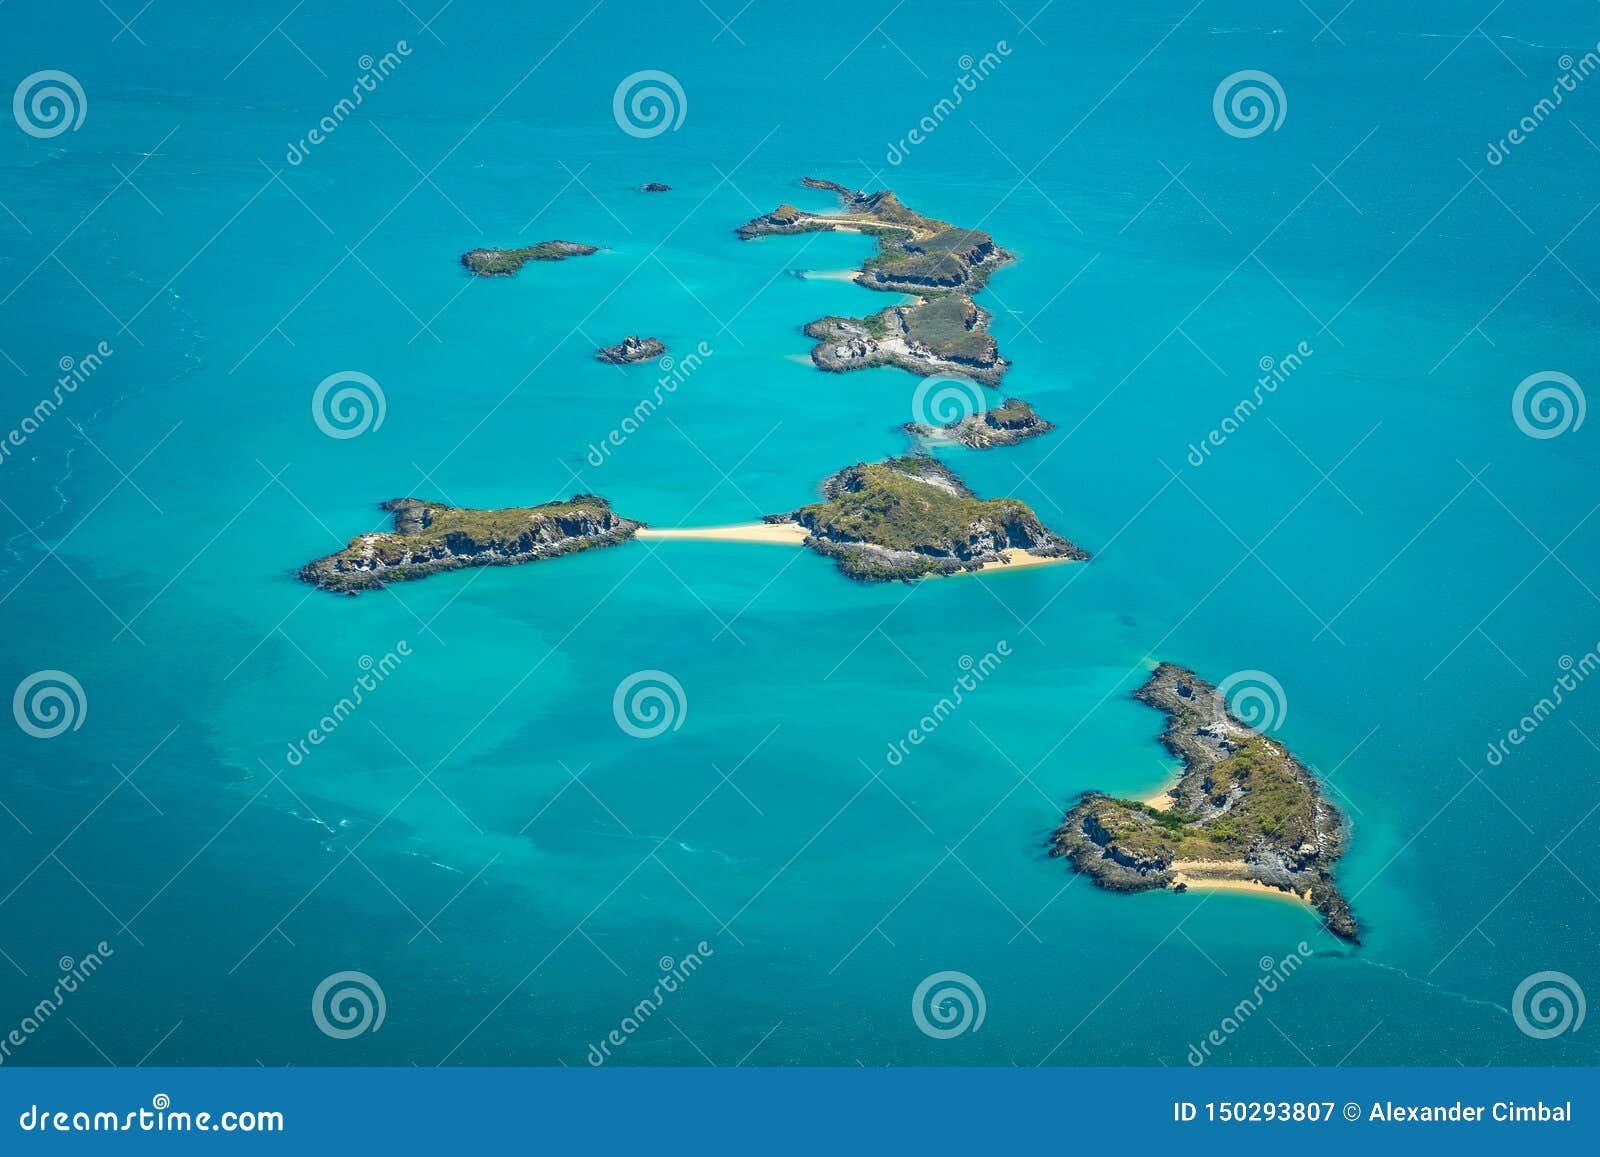 islands in the buccaneer archipelago, western australia